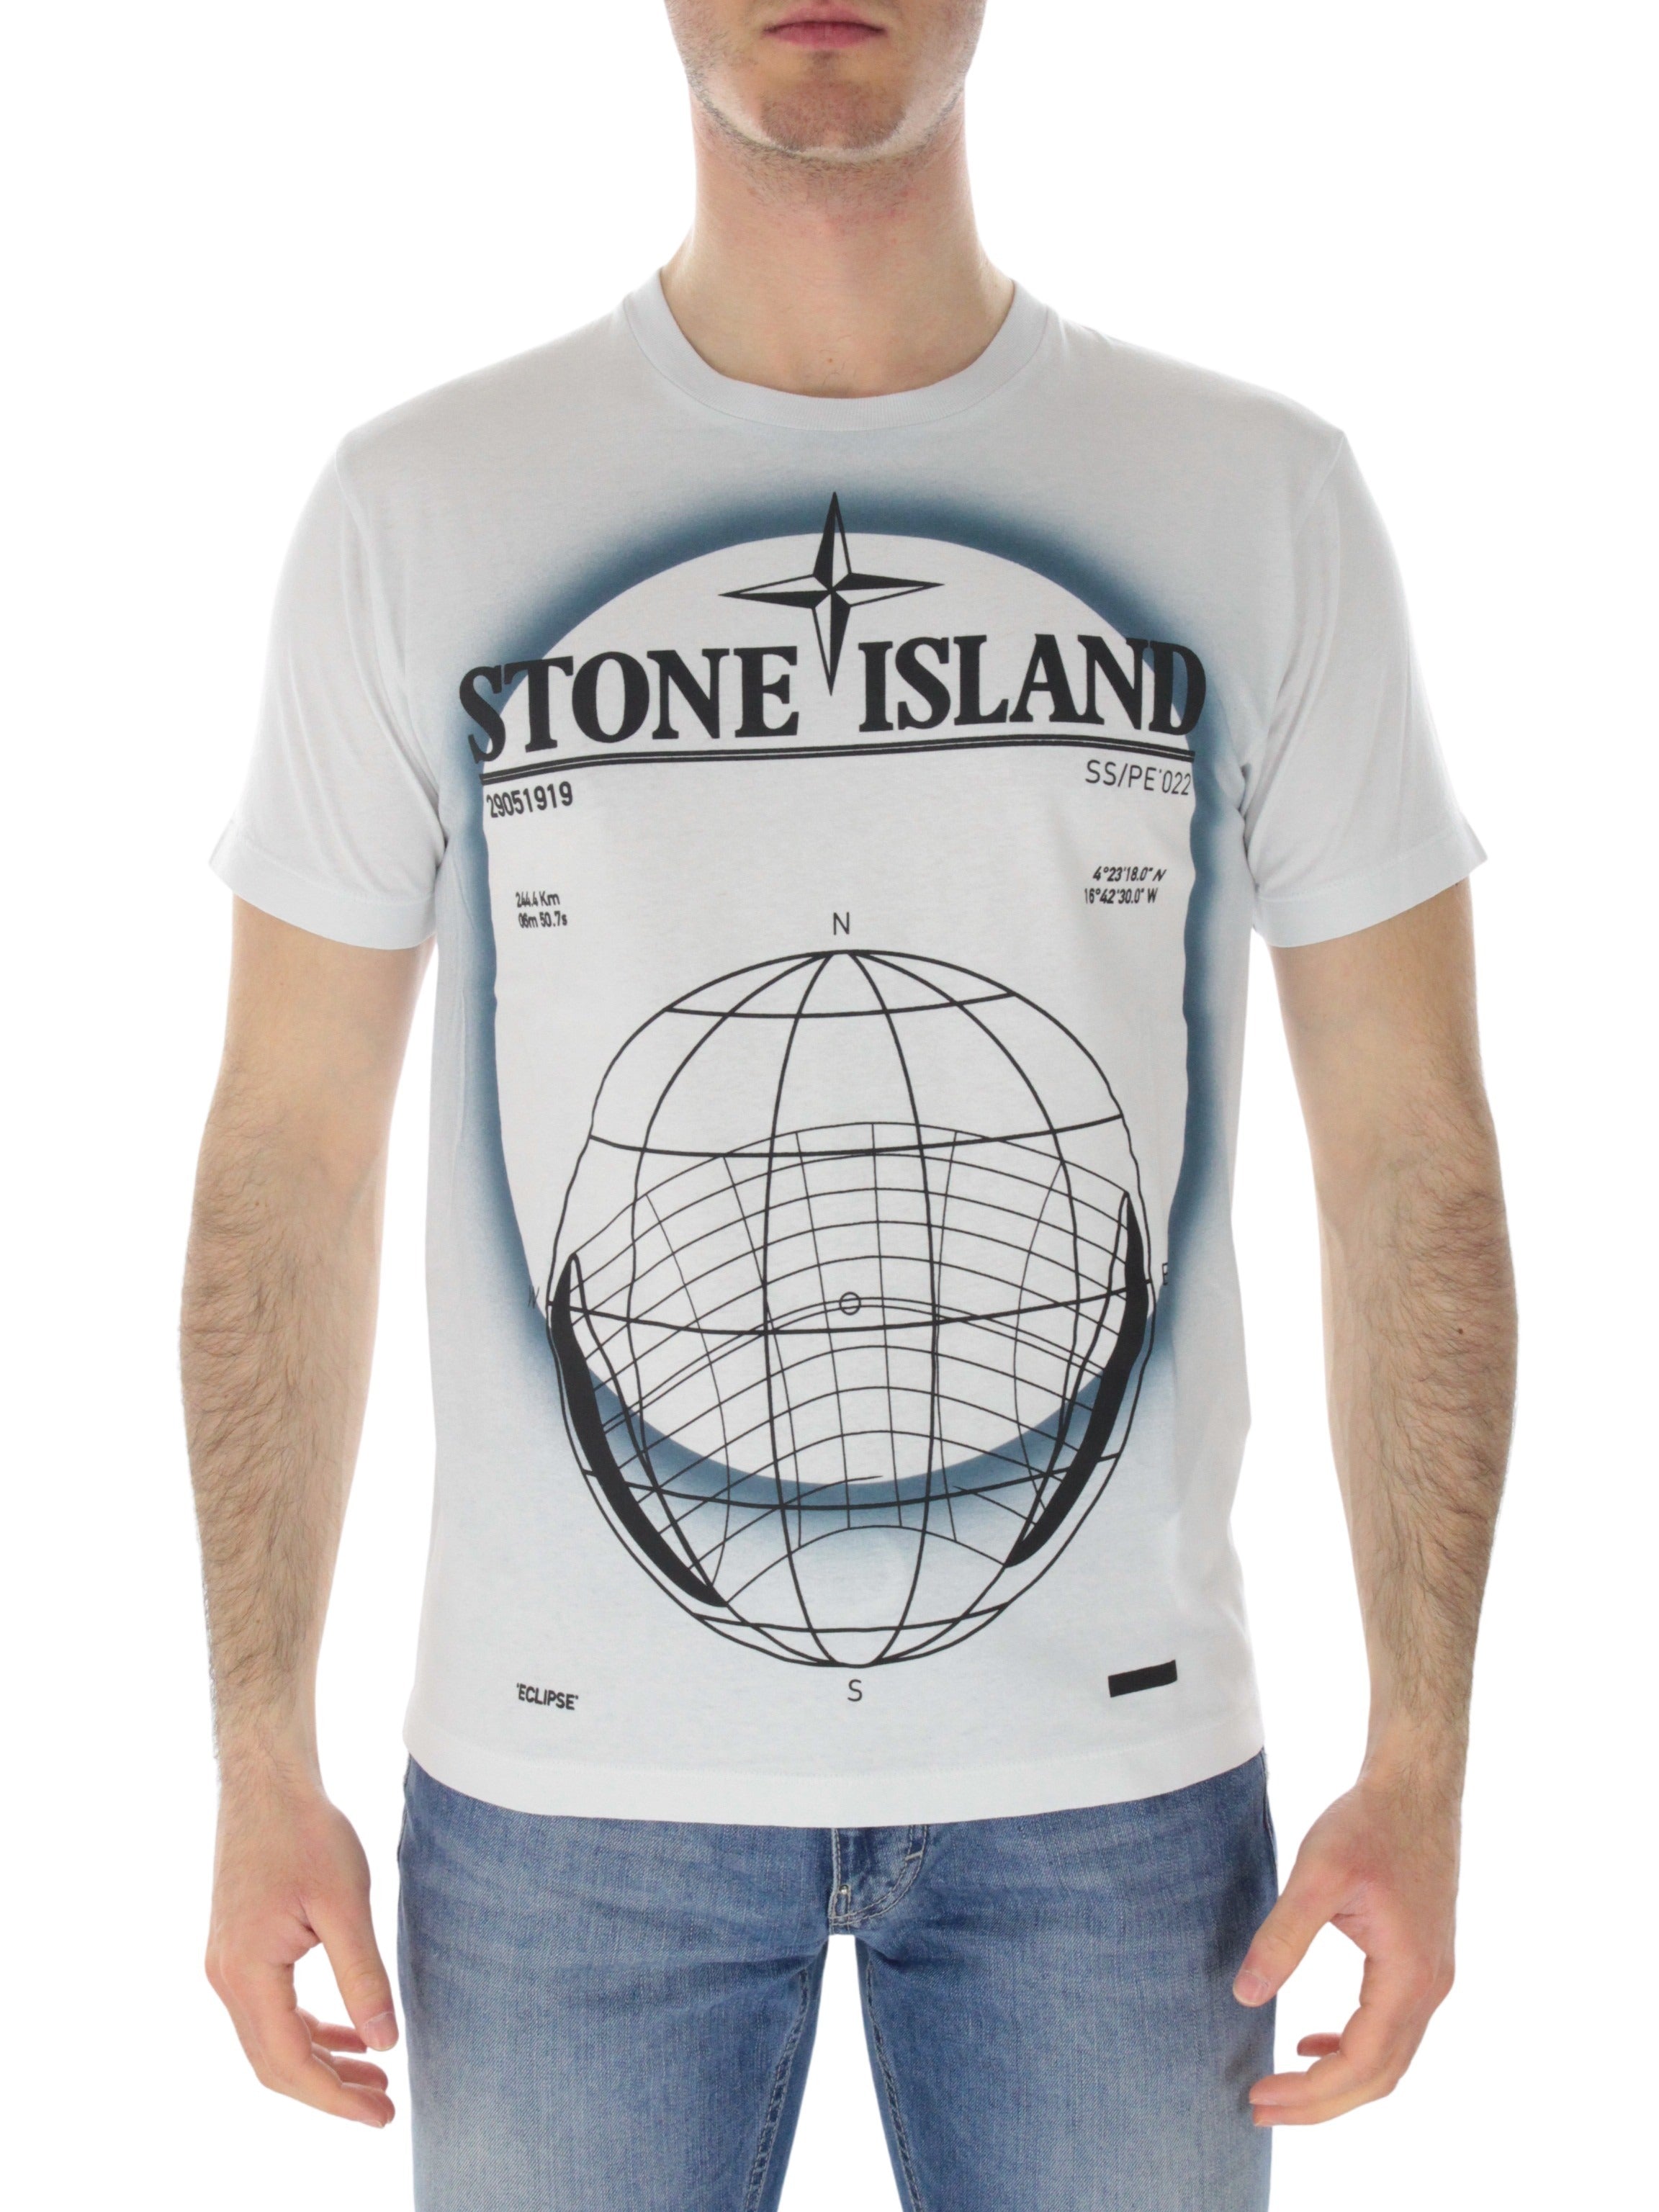 Stone island t-shirt